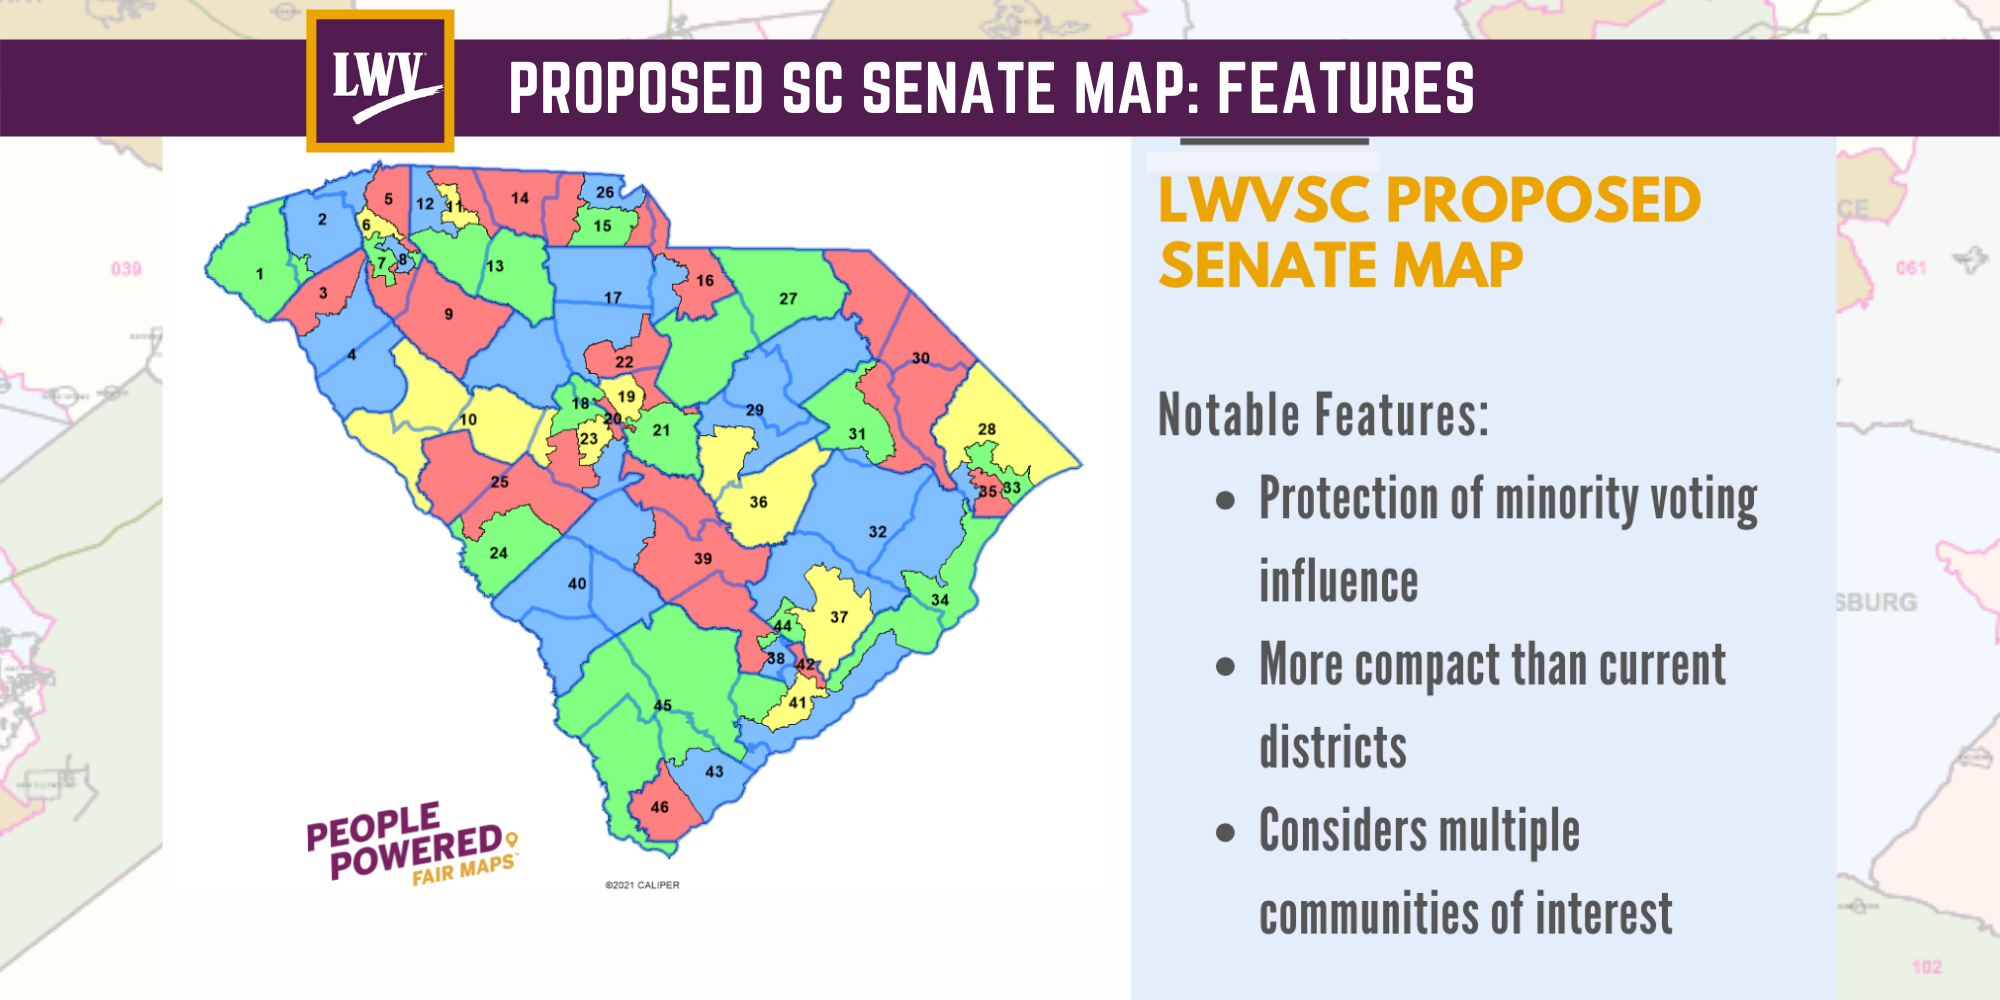 LWVSC Proposed Senate Map: Features 